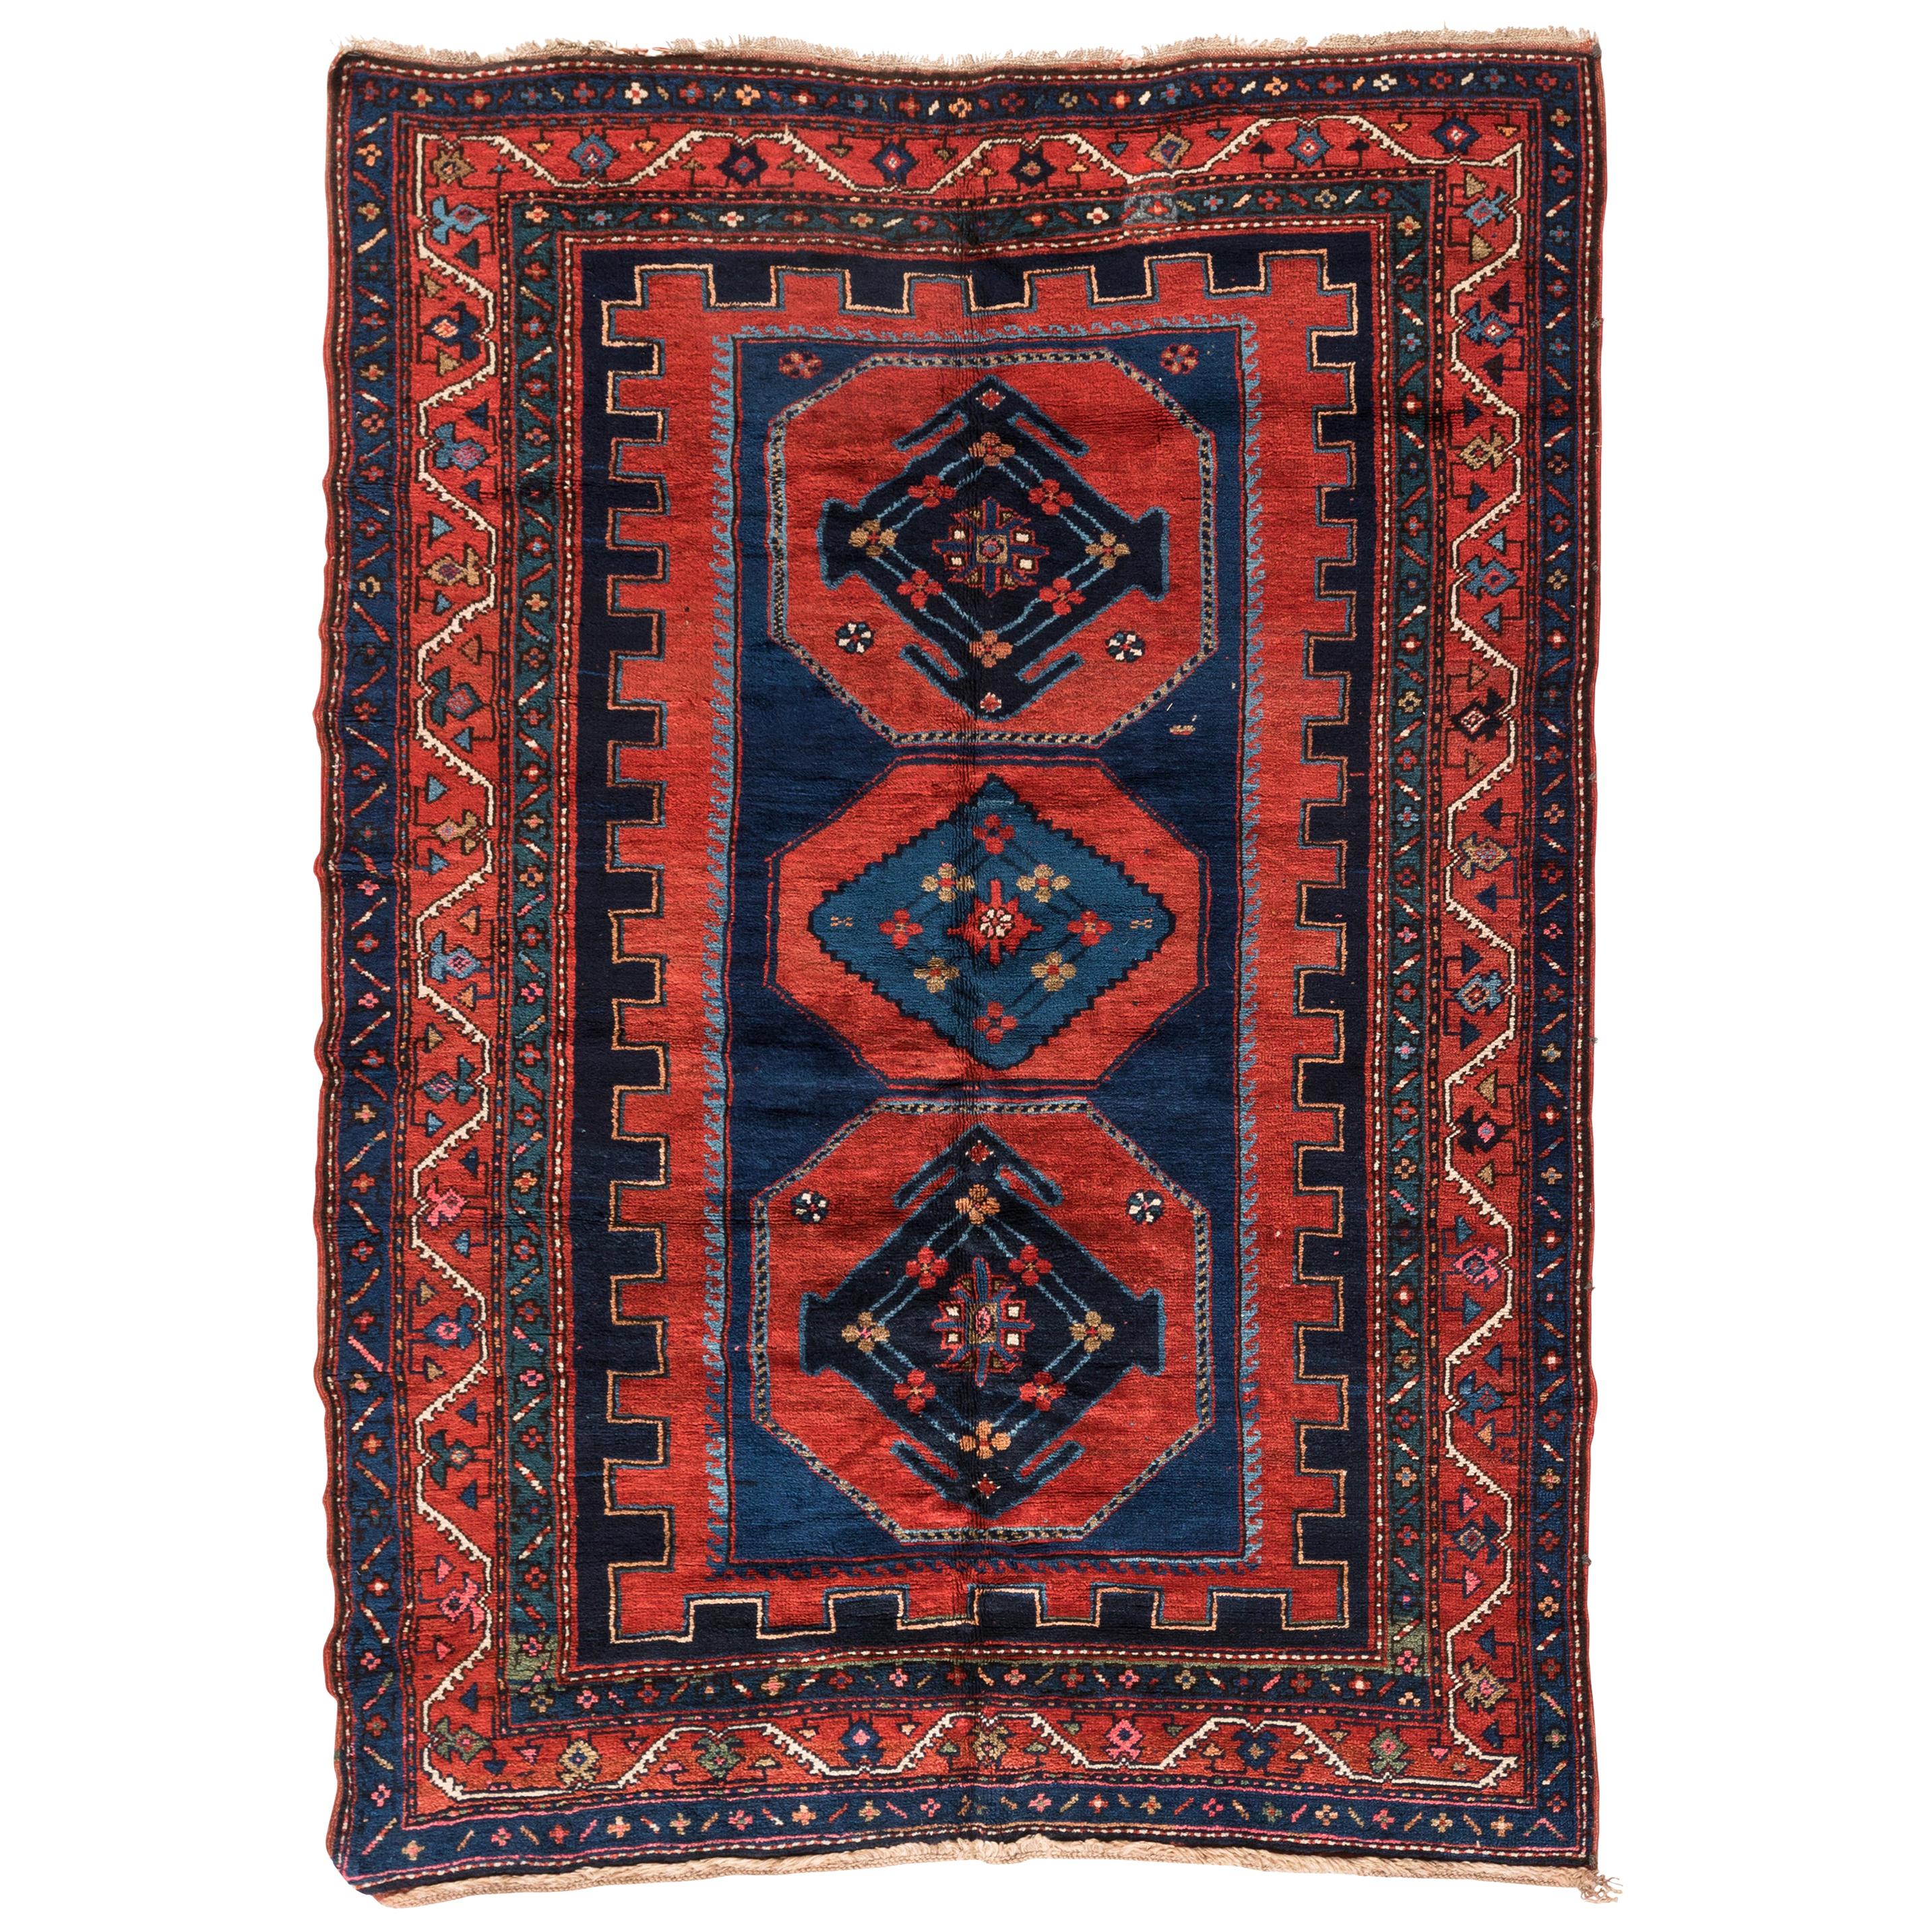 Antique Red and Blue Caucasian Tribal Kazak Rug, circa 1930s